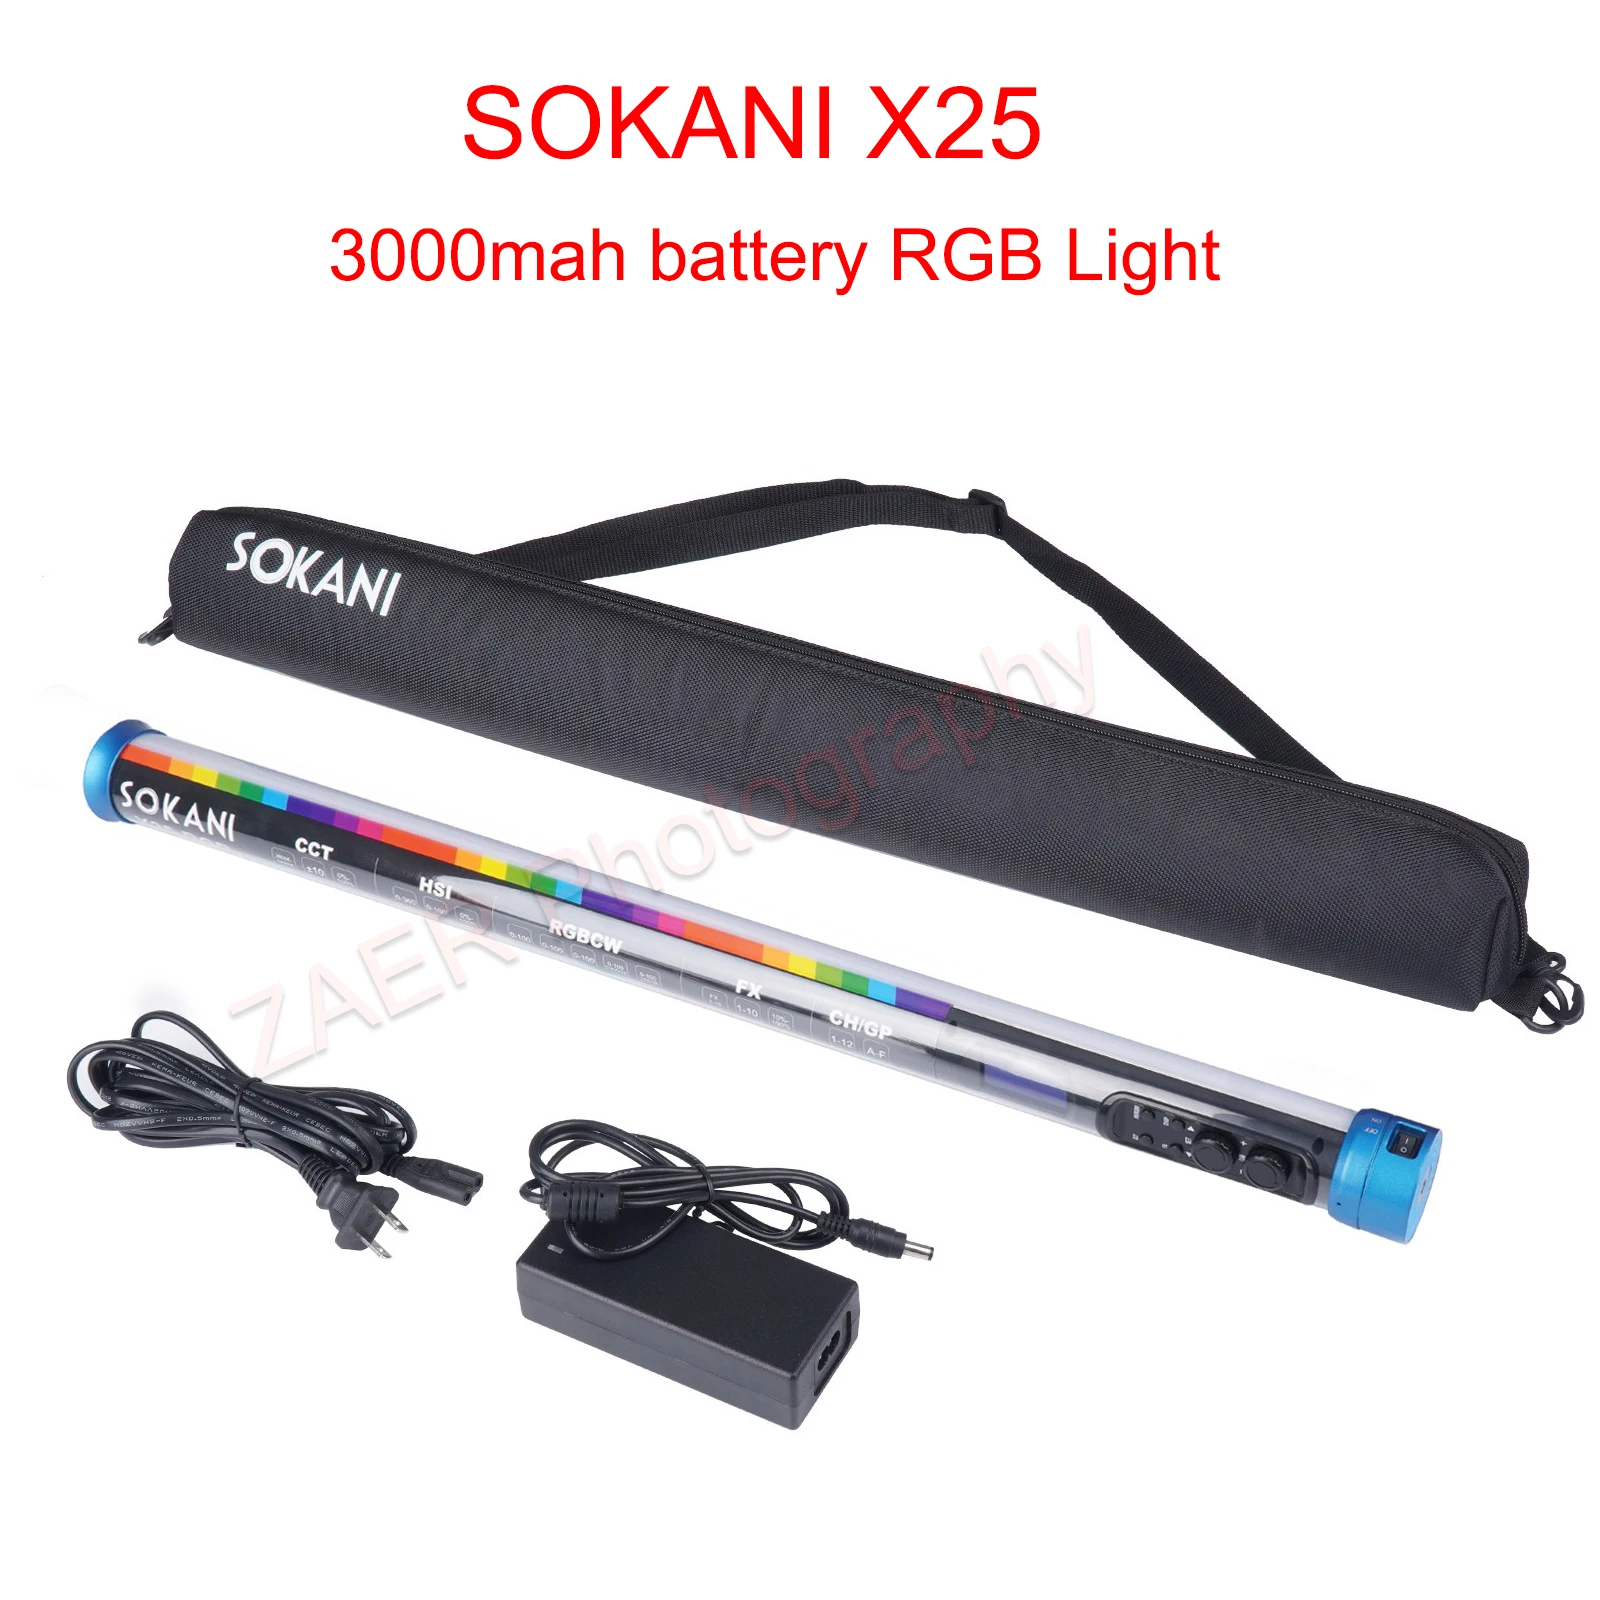 

SOKANI X25 Stick Fill light Portable built-in 3000mah battery RGB Light Tube Handheld Photography Lighting Remote control